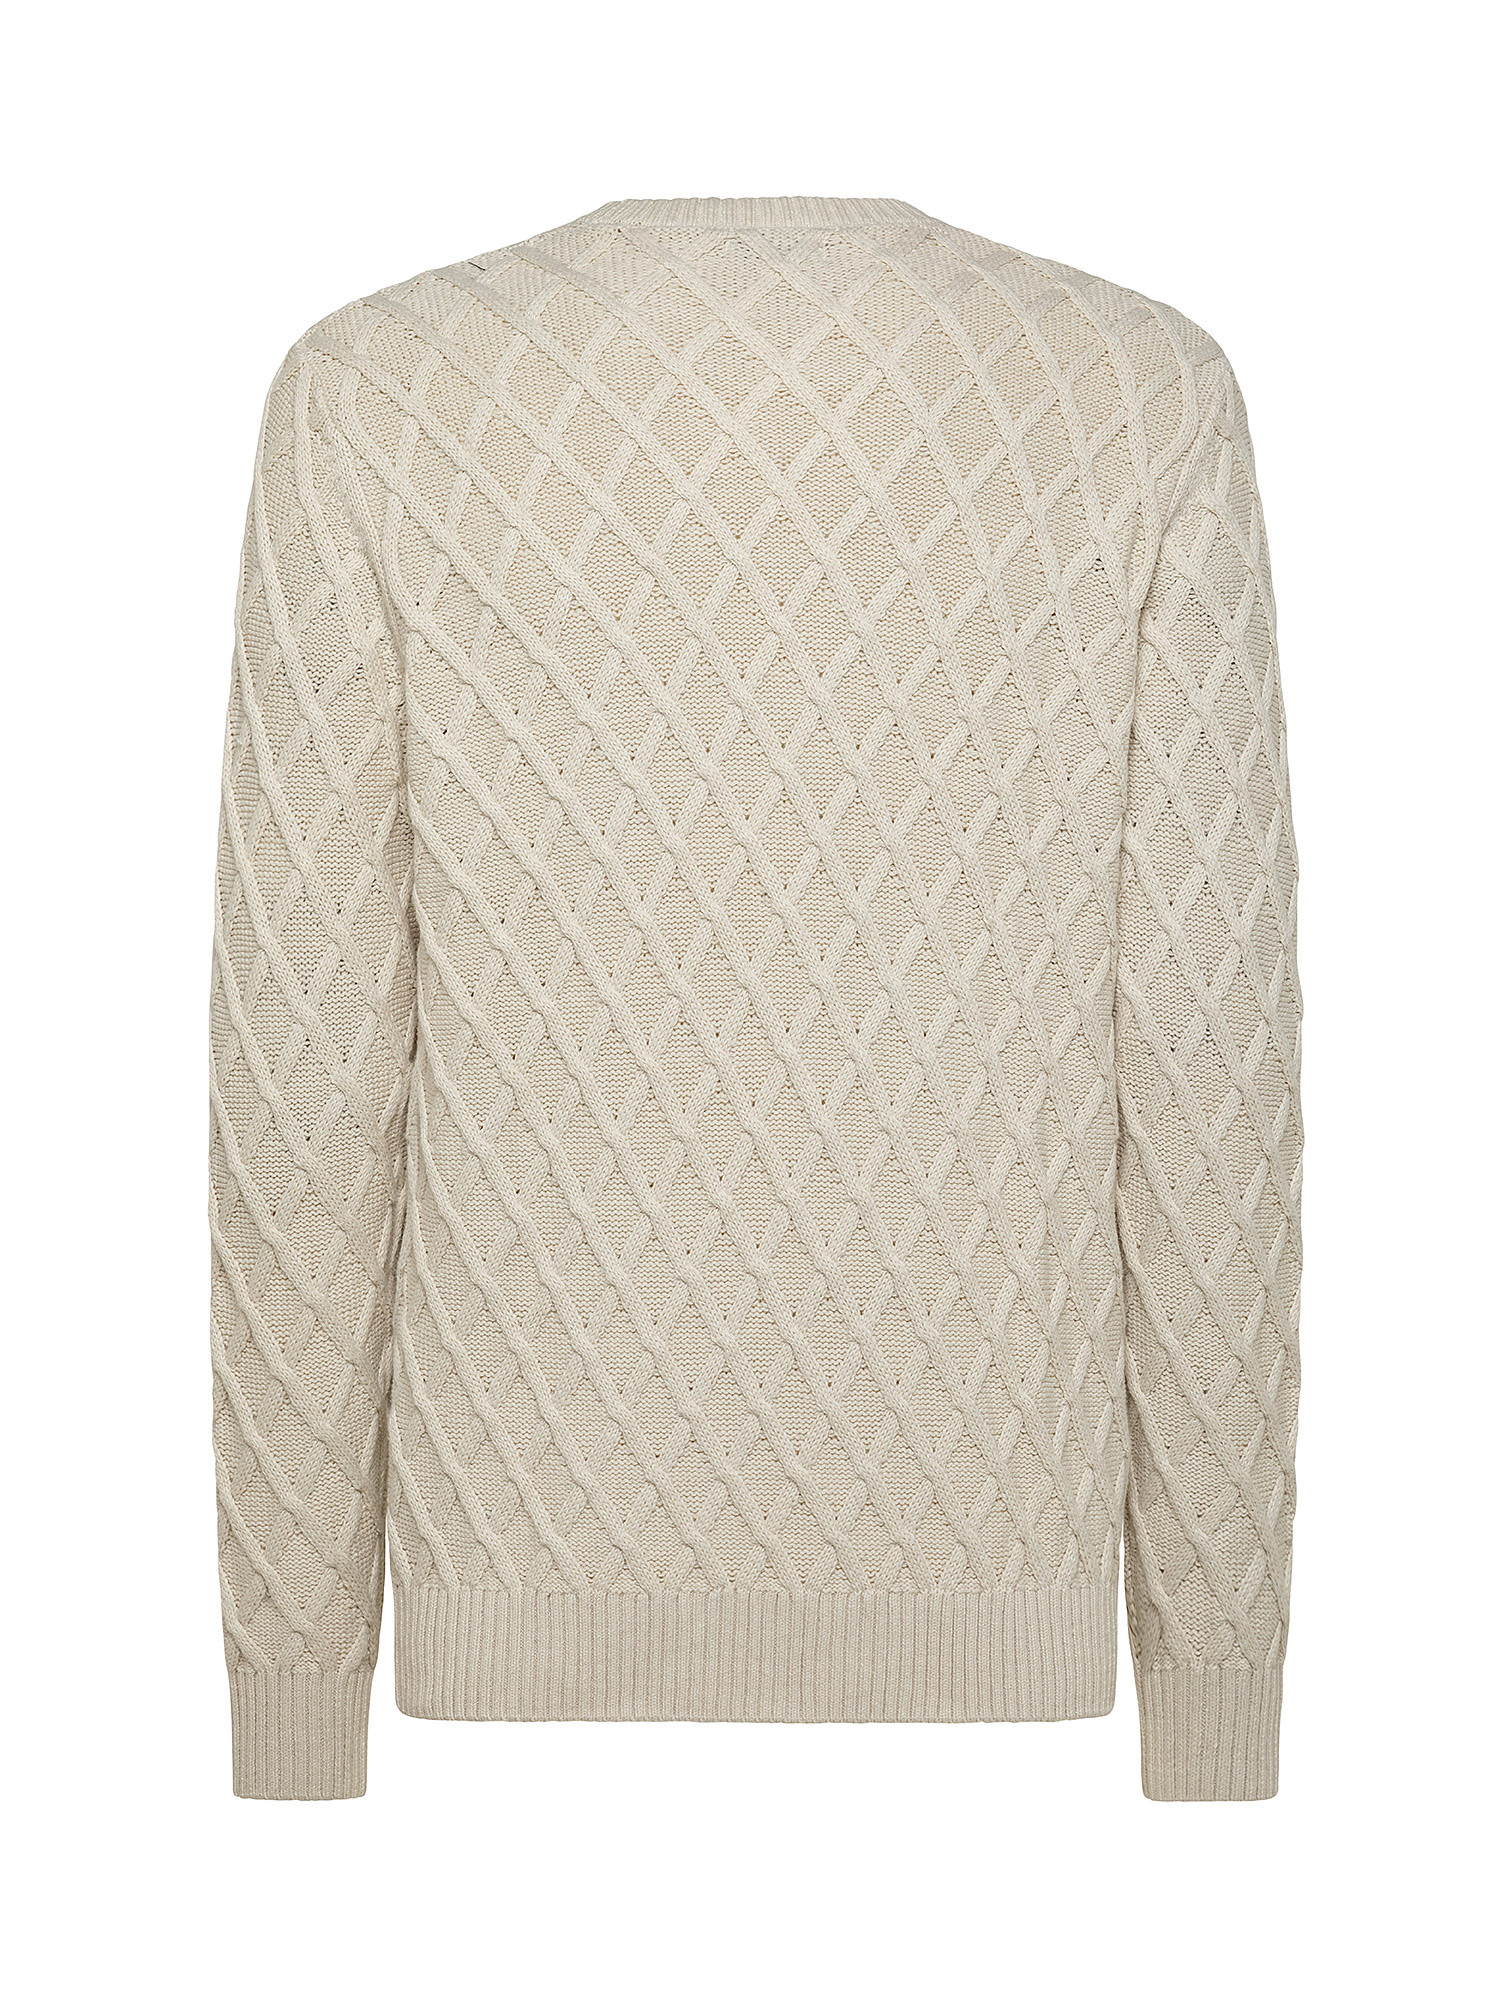 Jacquard braid crewneck sweater, White Cream, large image number 1